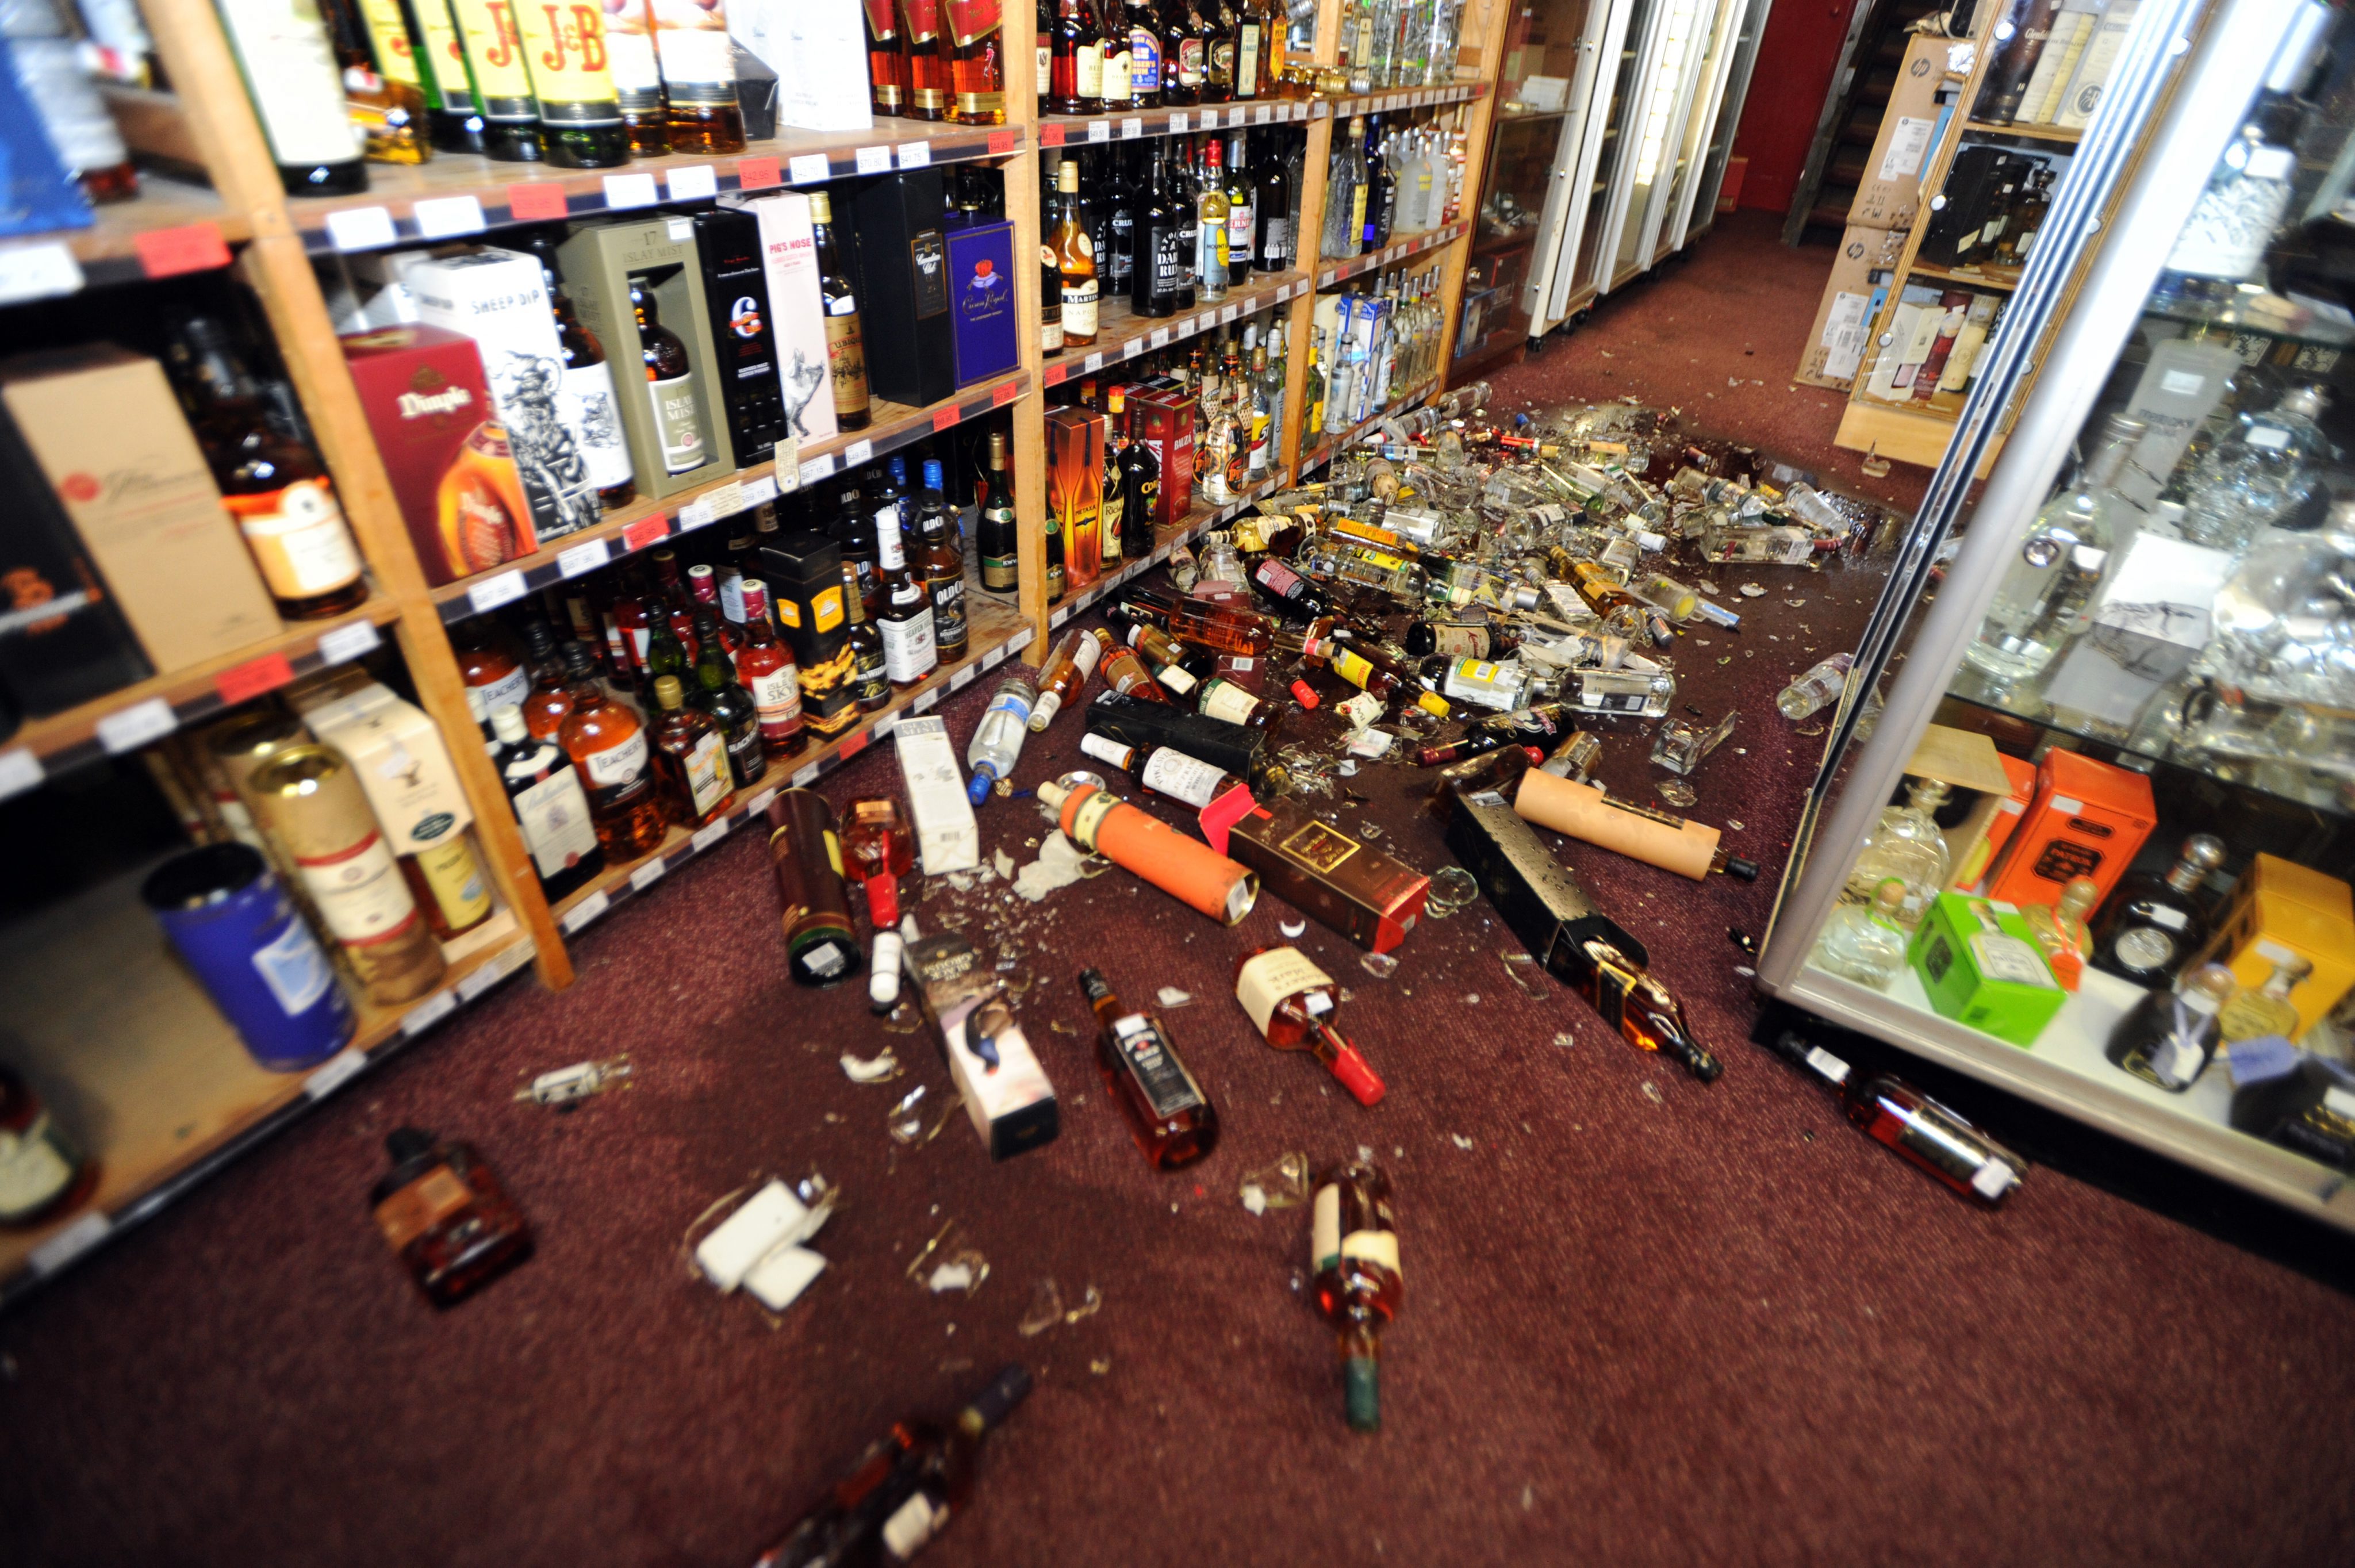 Broken on the floor. Разбитые бутылки в магазине. Разгромленный магазин. Разгром в магазине.